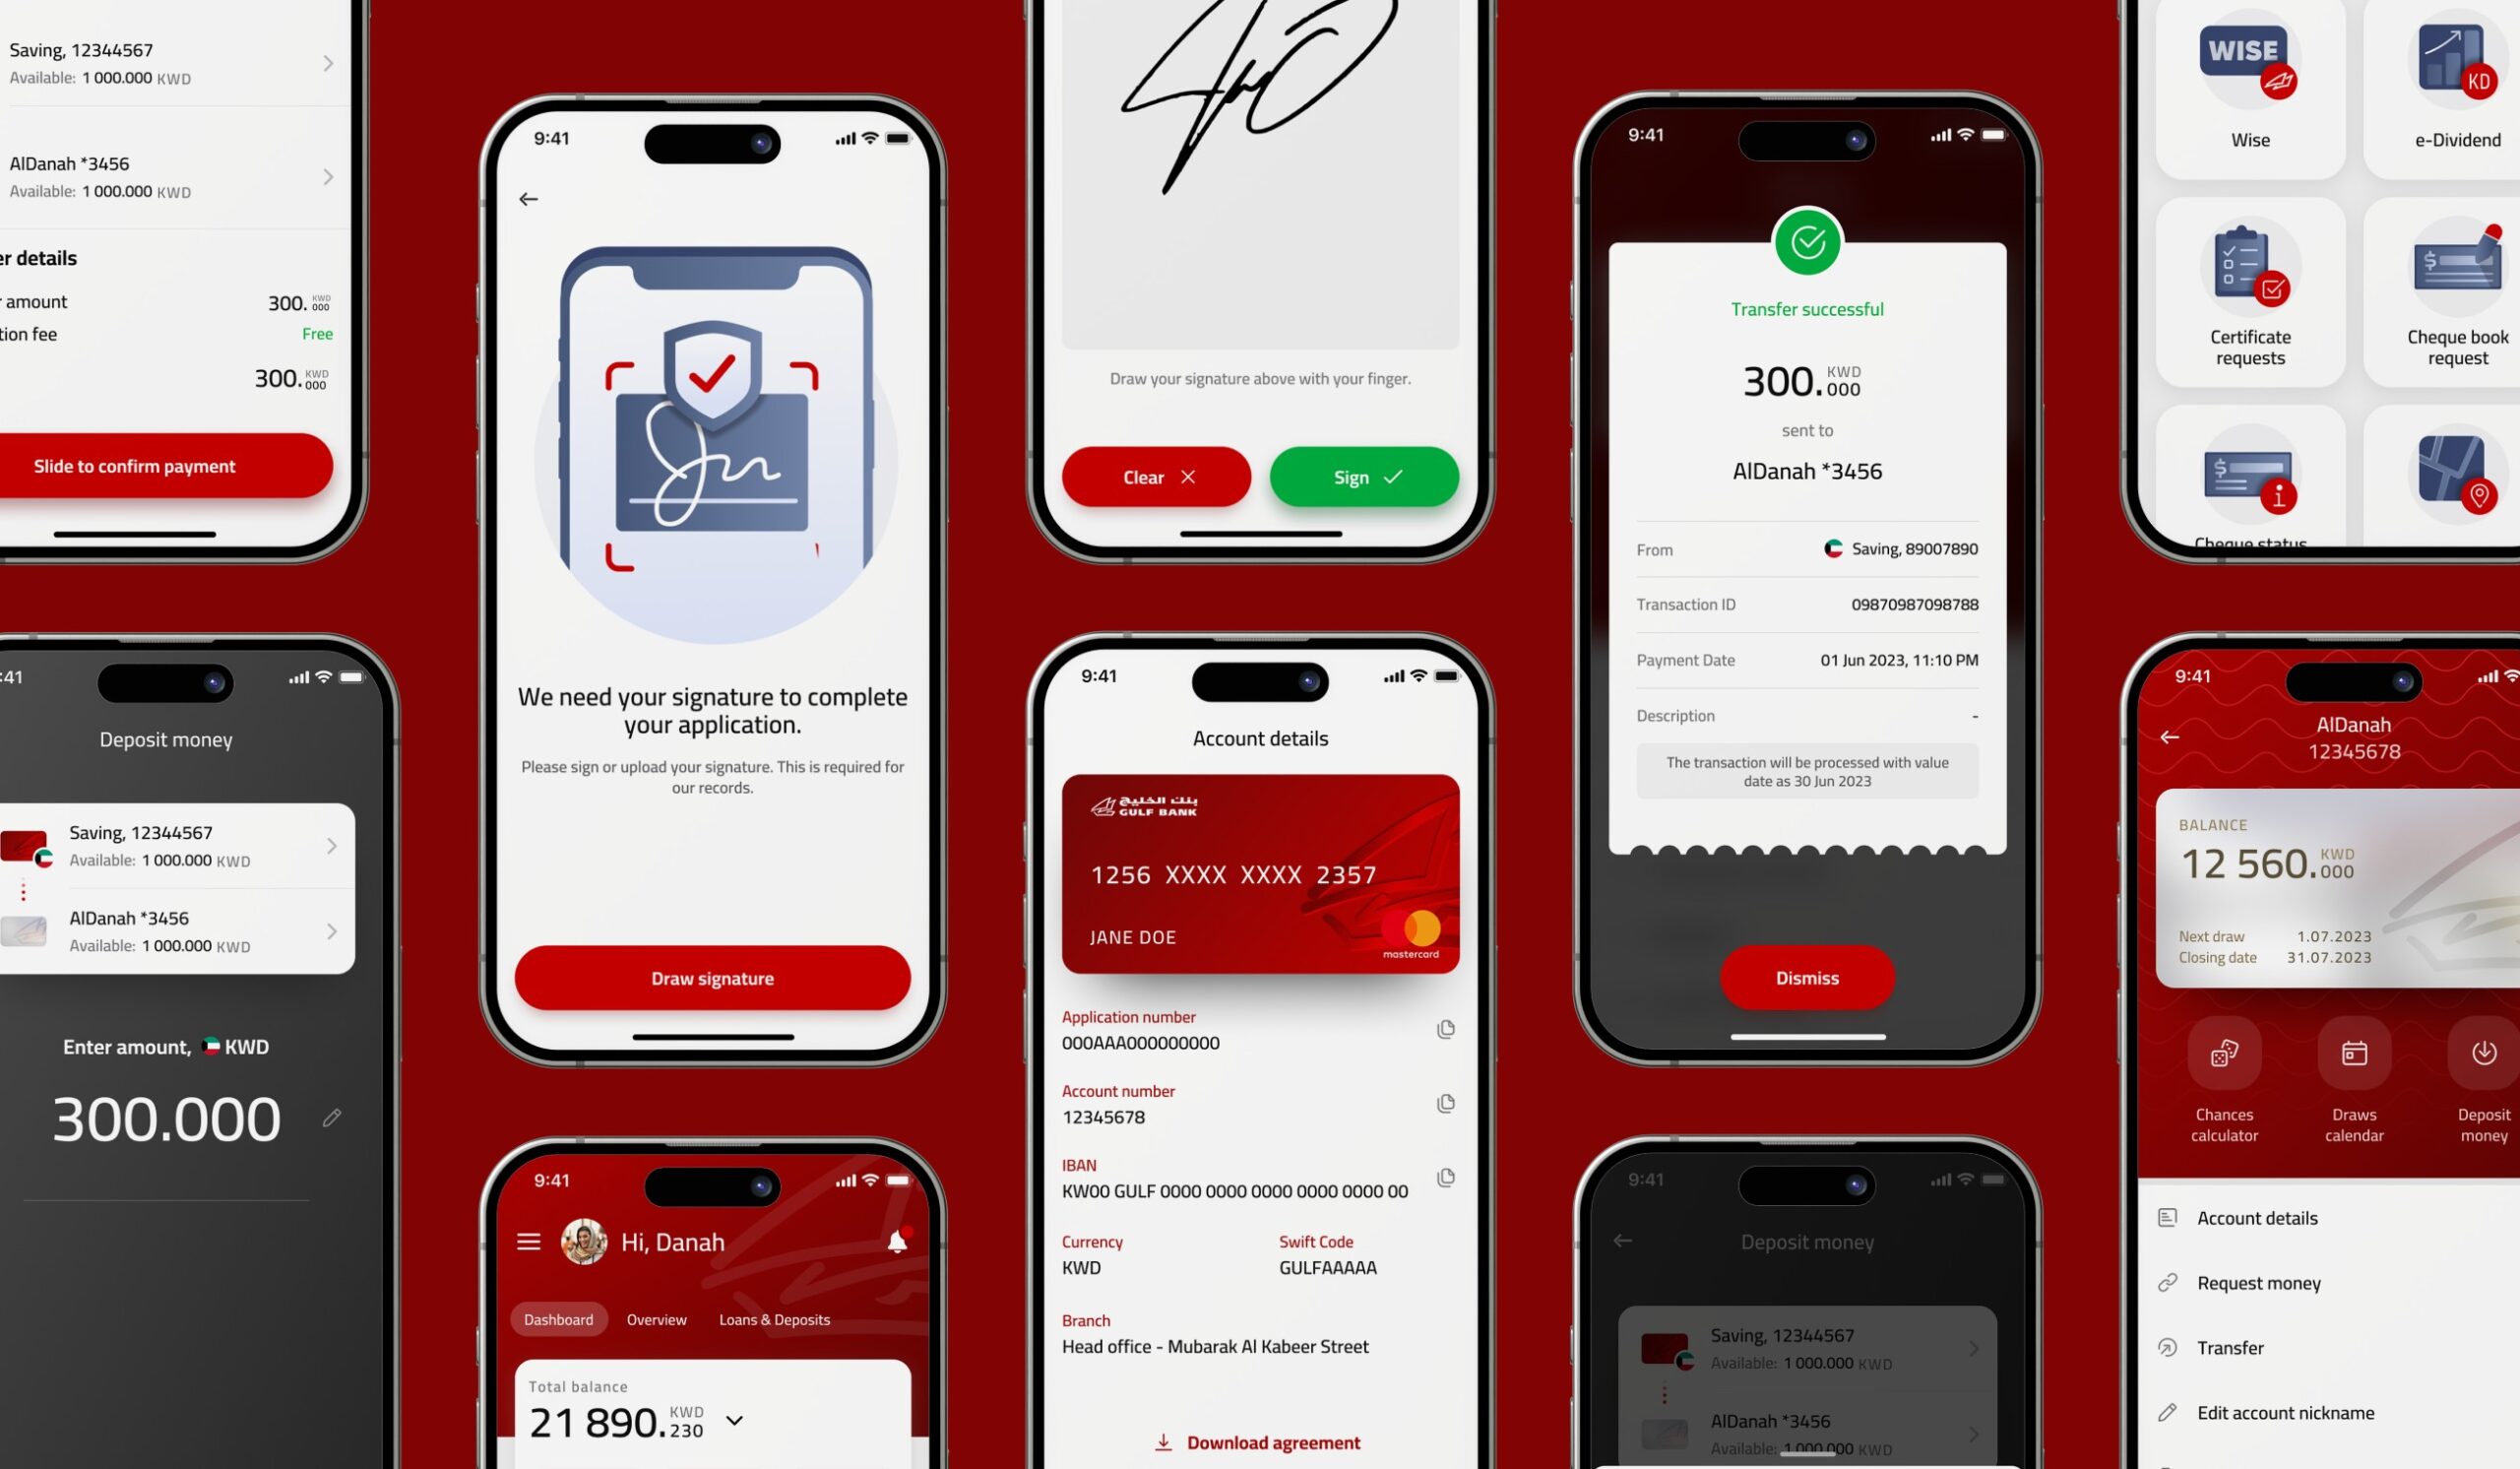 Gulf Bank mobile banking app design